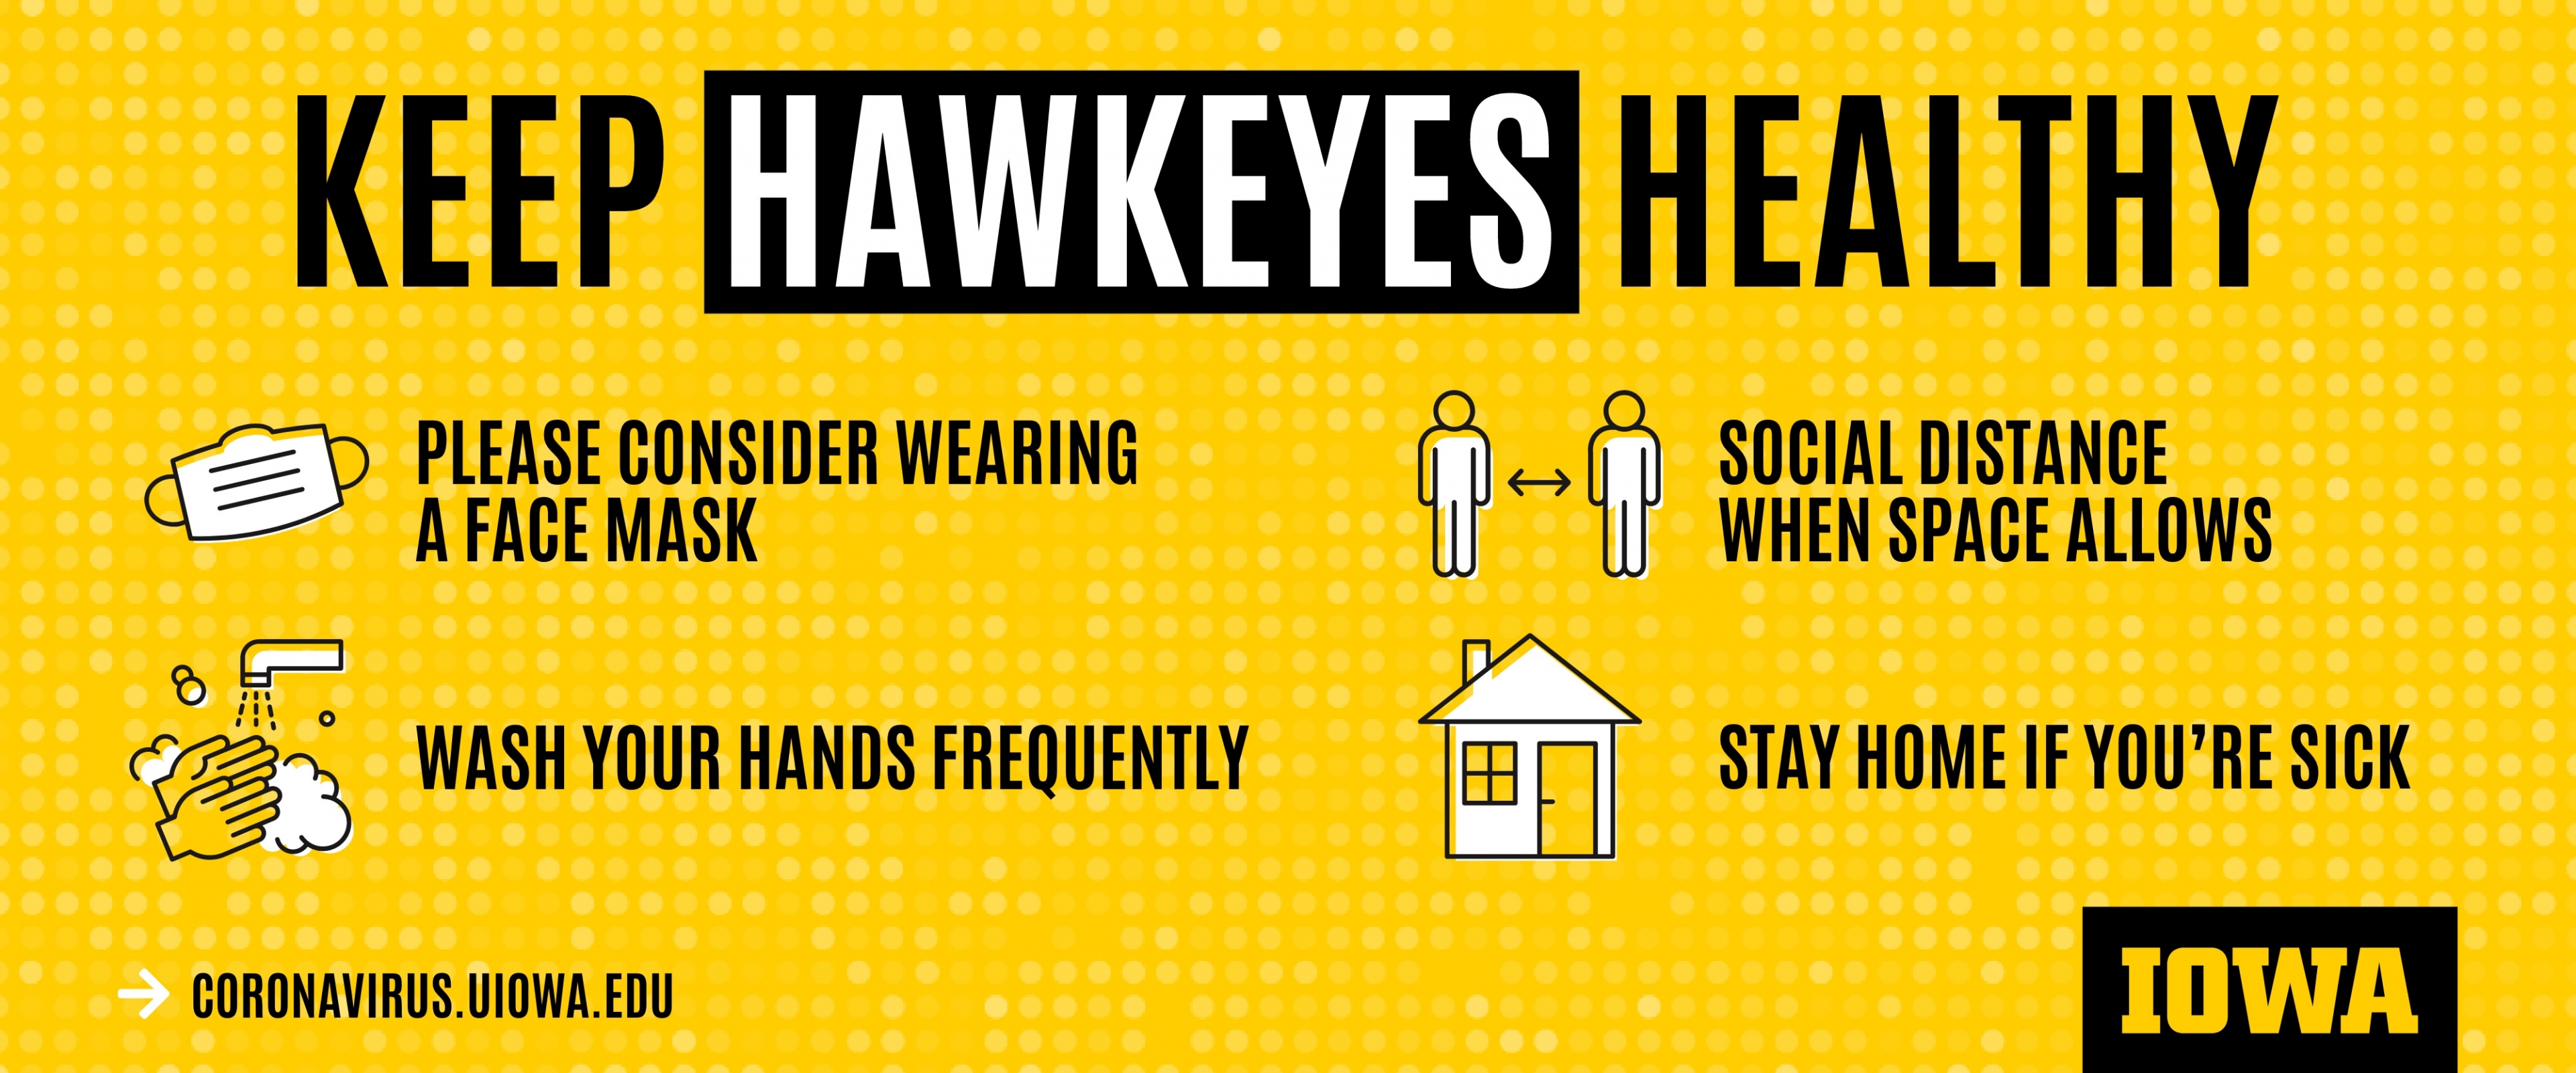 Keep Hawkeyes Healthy: https://coronavirus.uiowa.edu/